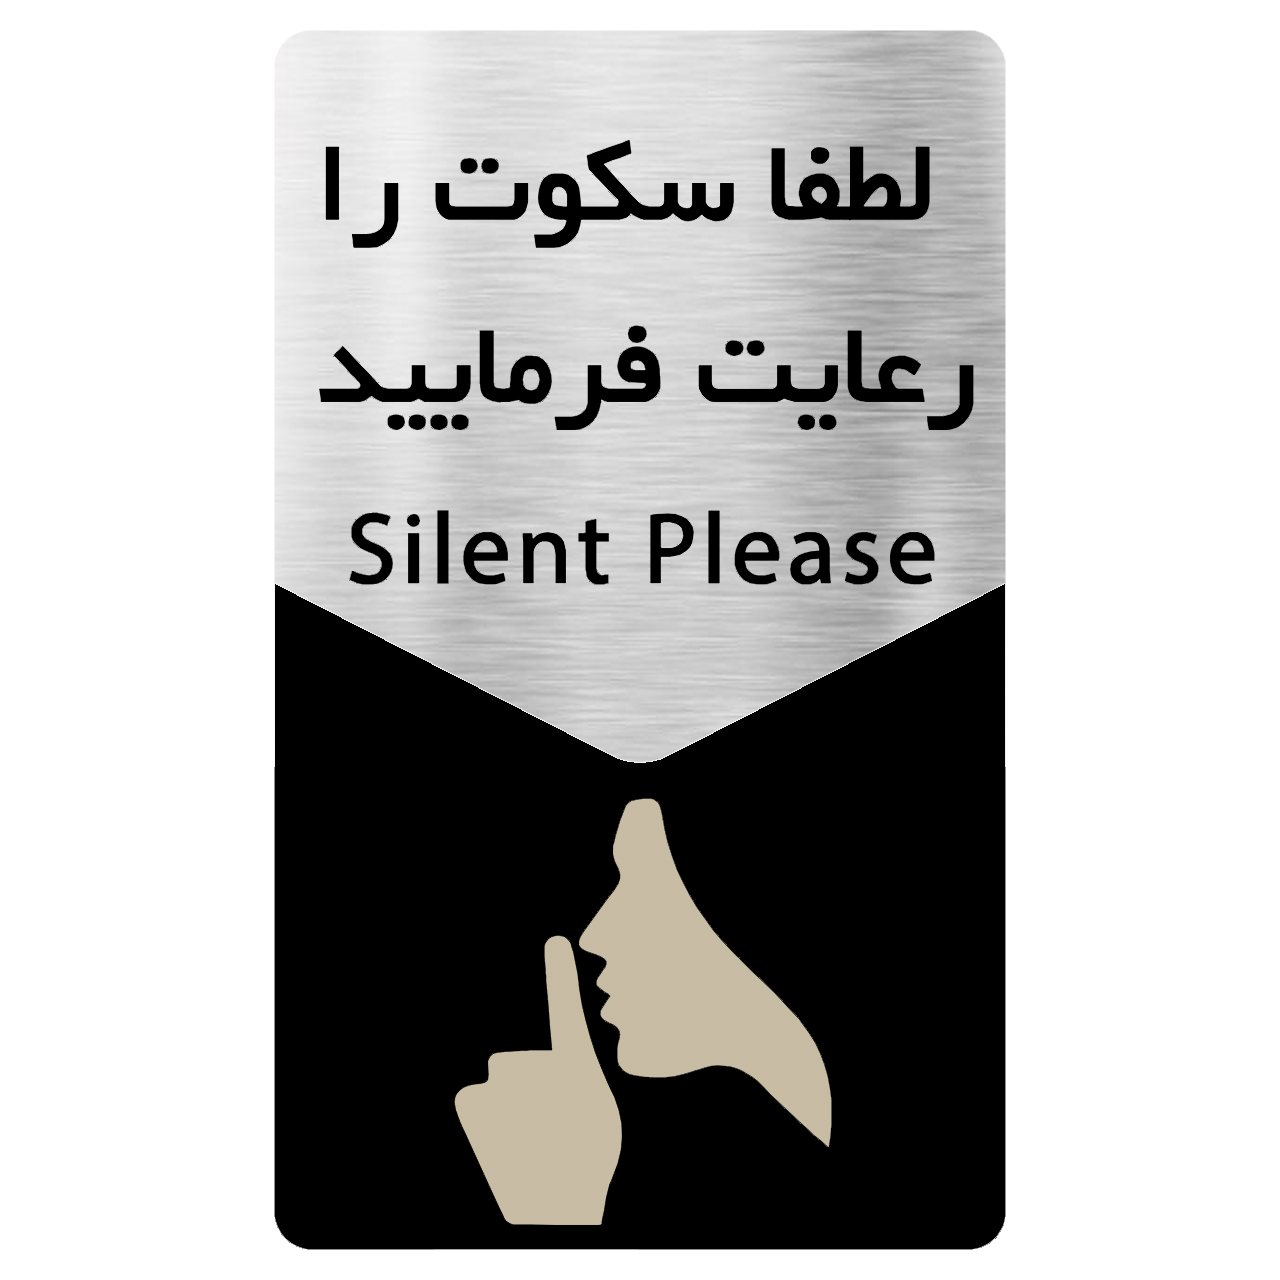 Silent please